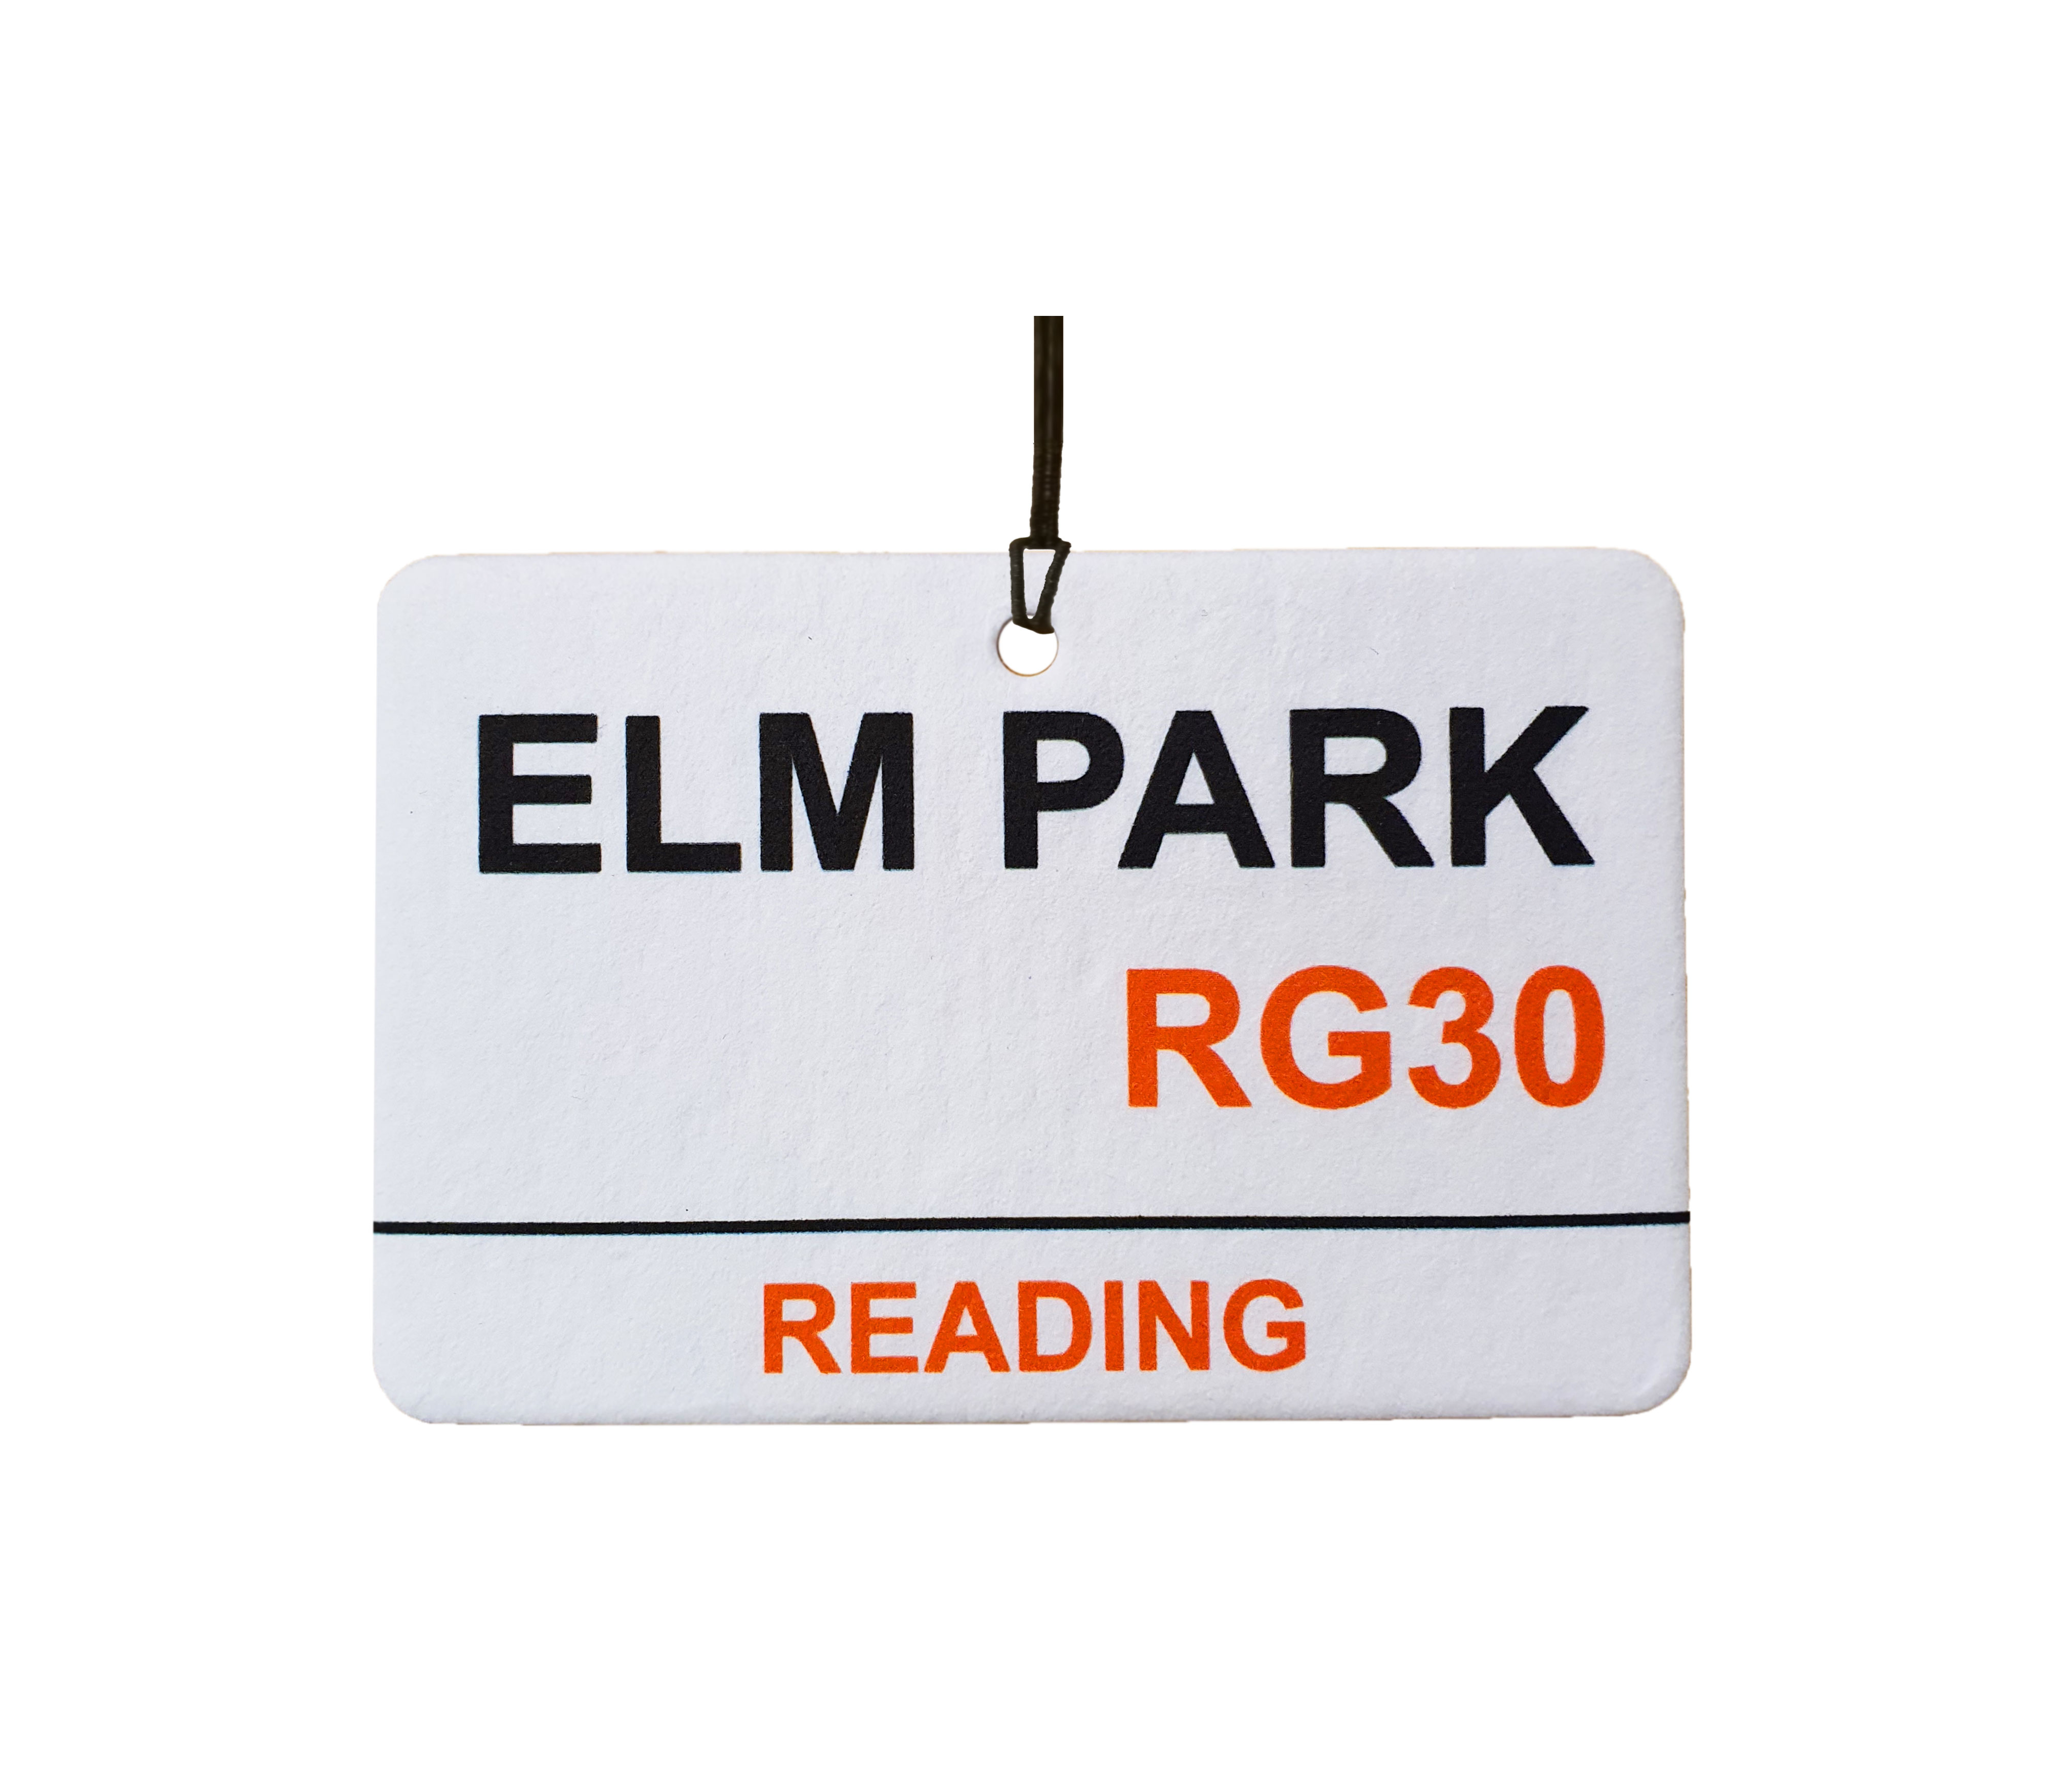 Reading / Elm Park Street Sign